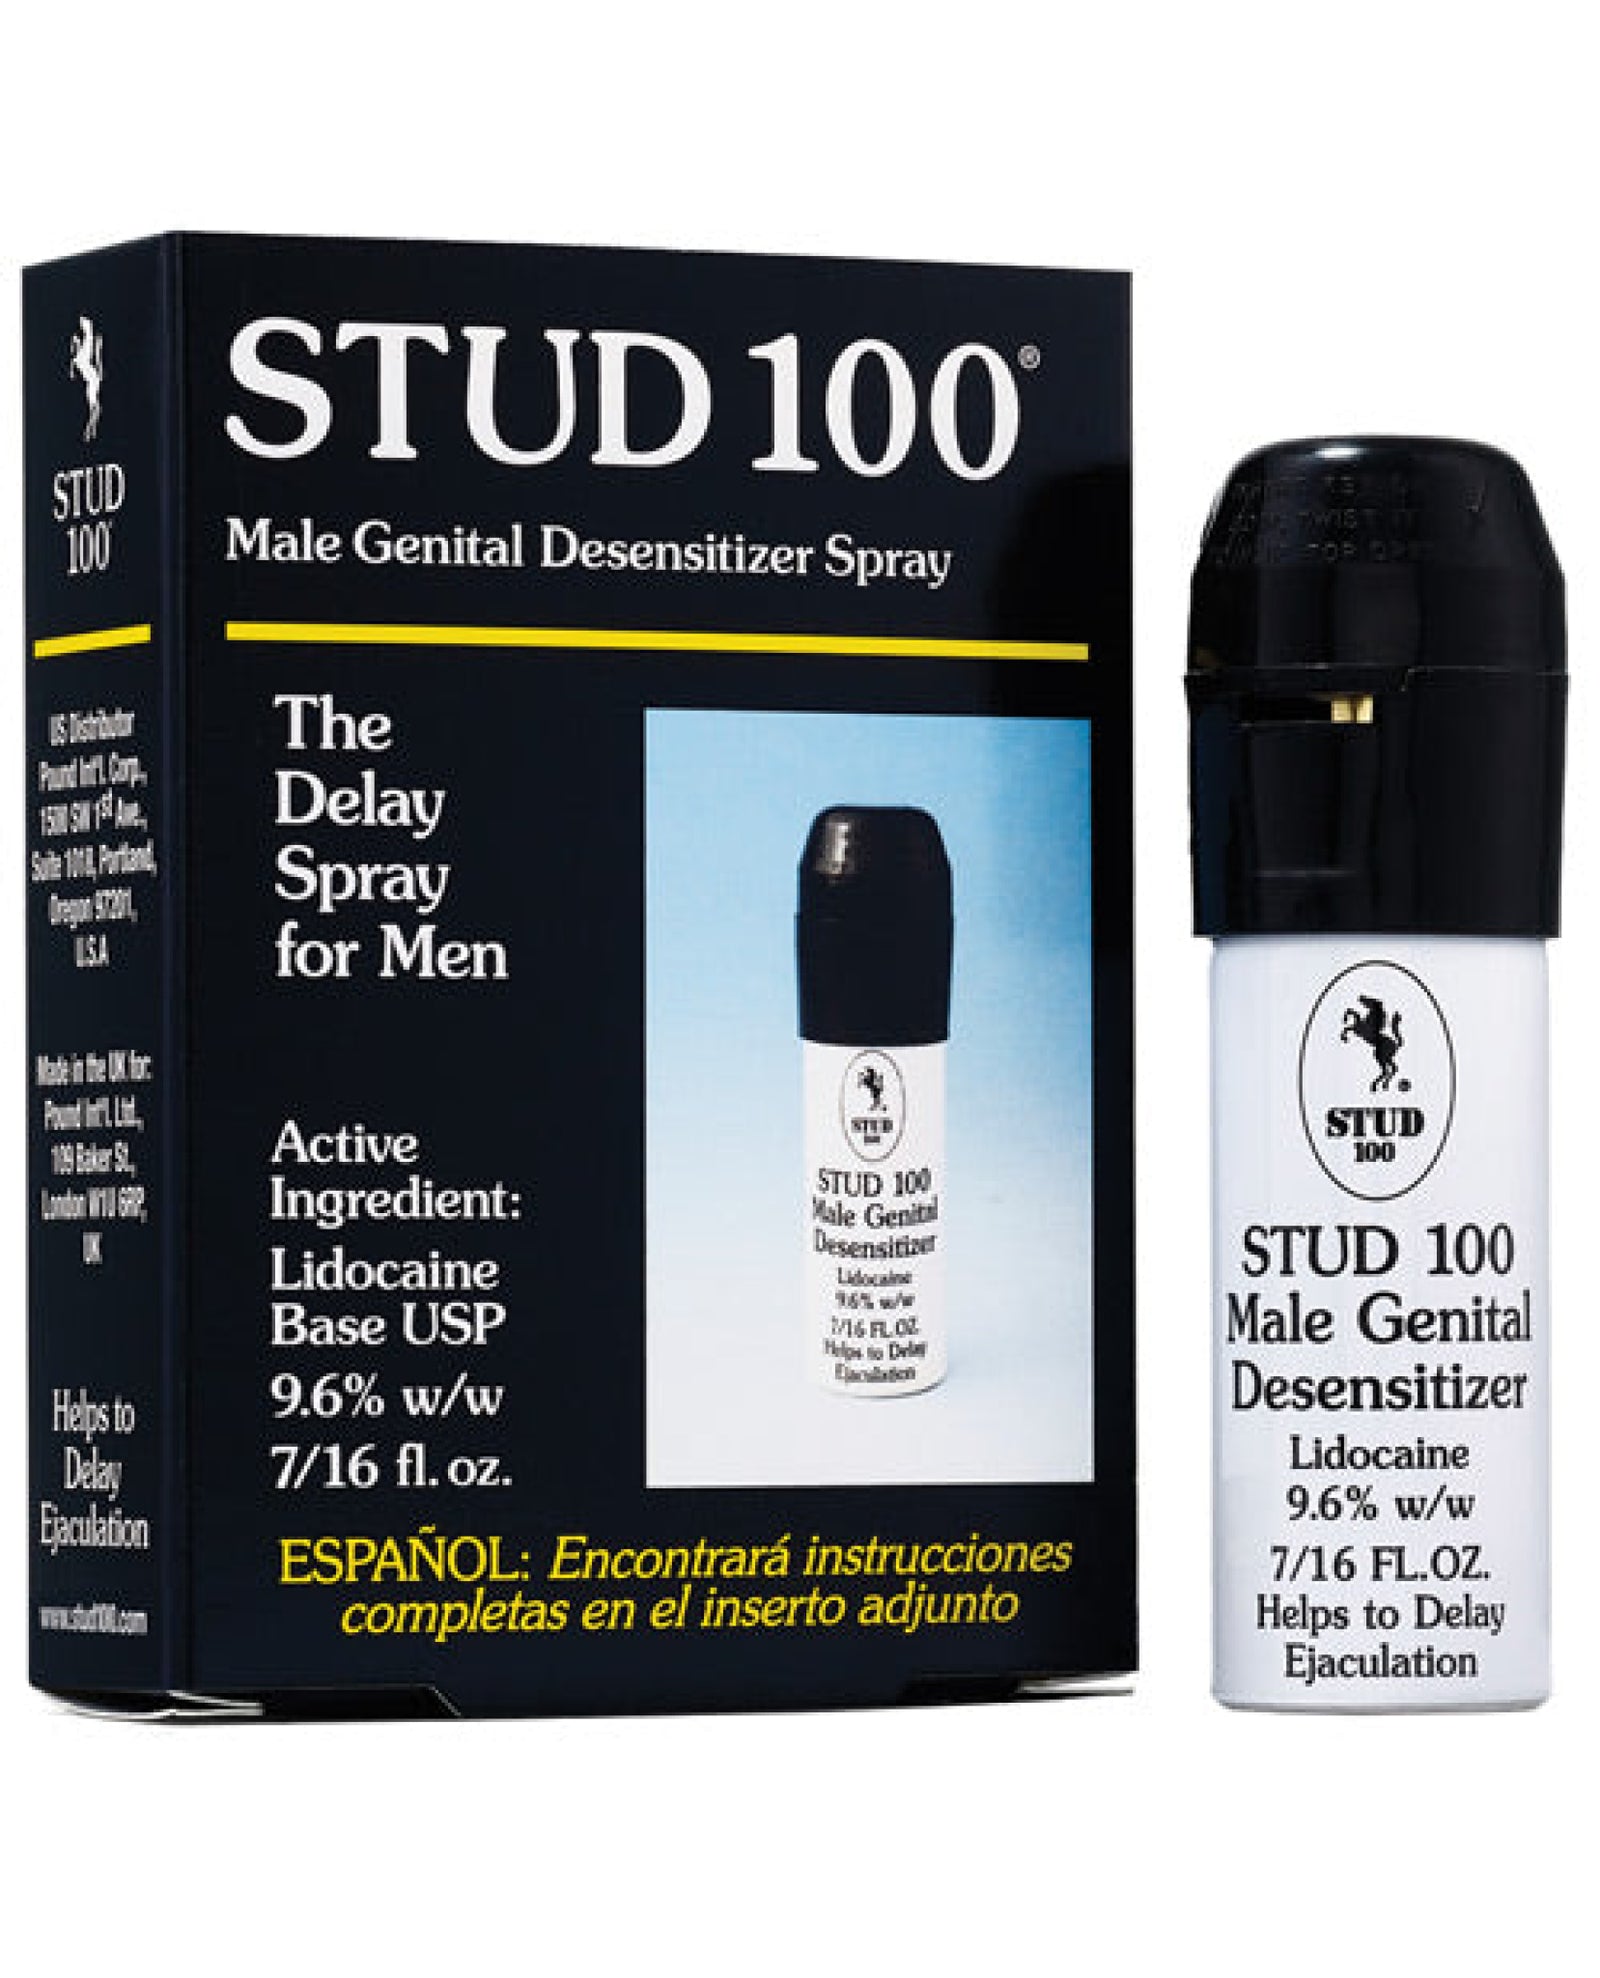 Stud 100 Male Genital Desensitizer Stud 100